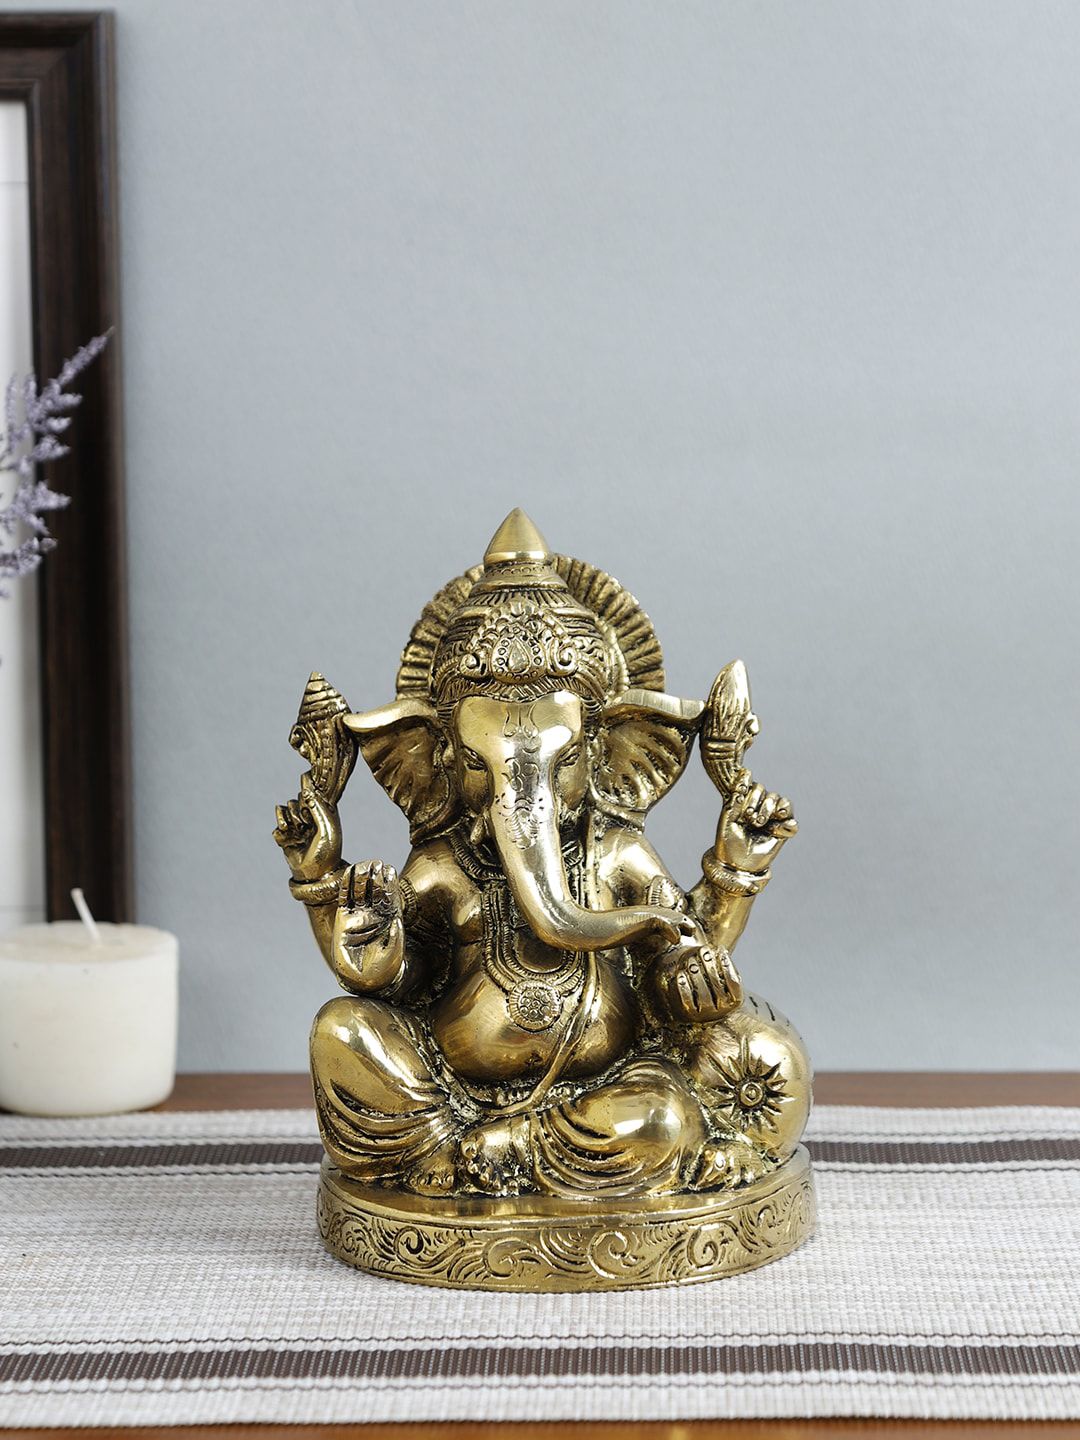 Imli Street Gold-Plated Ganesh 4 Hands Showpiece Price in India